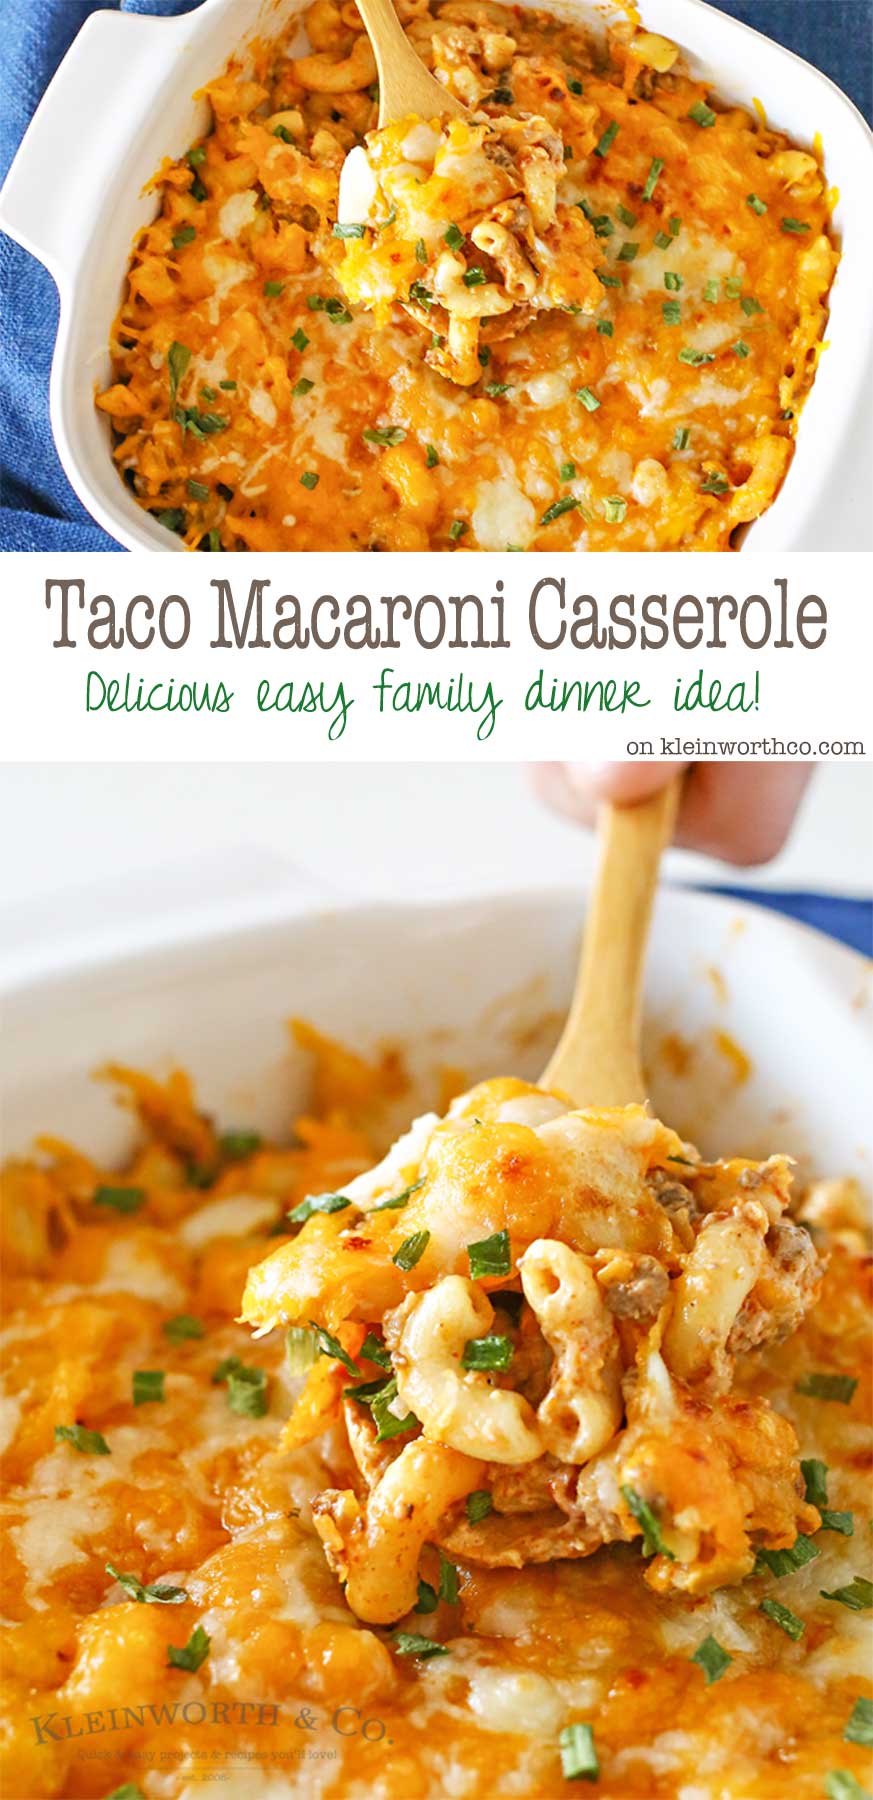 Taco Macaroni Casserole